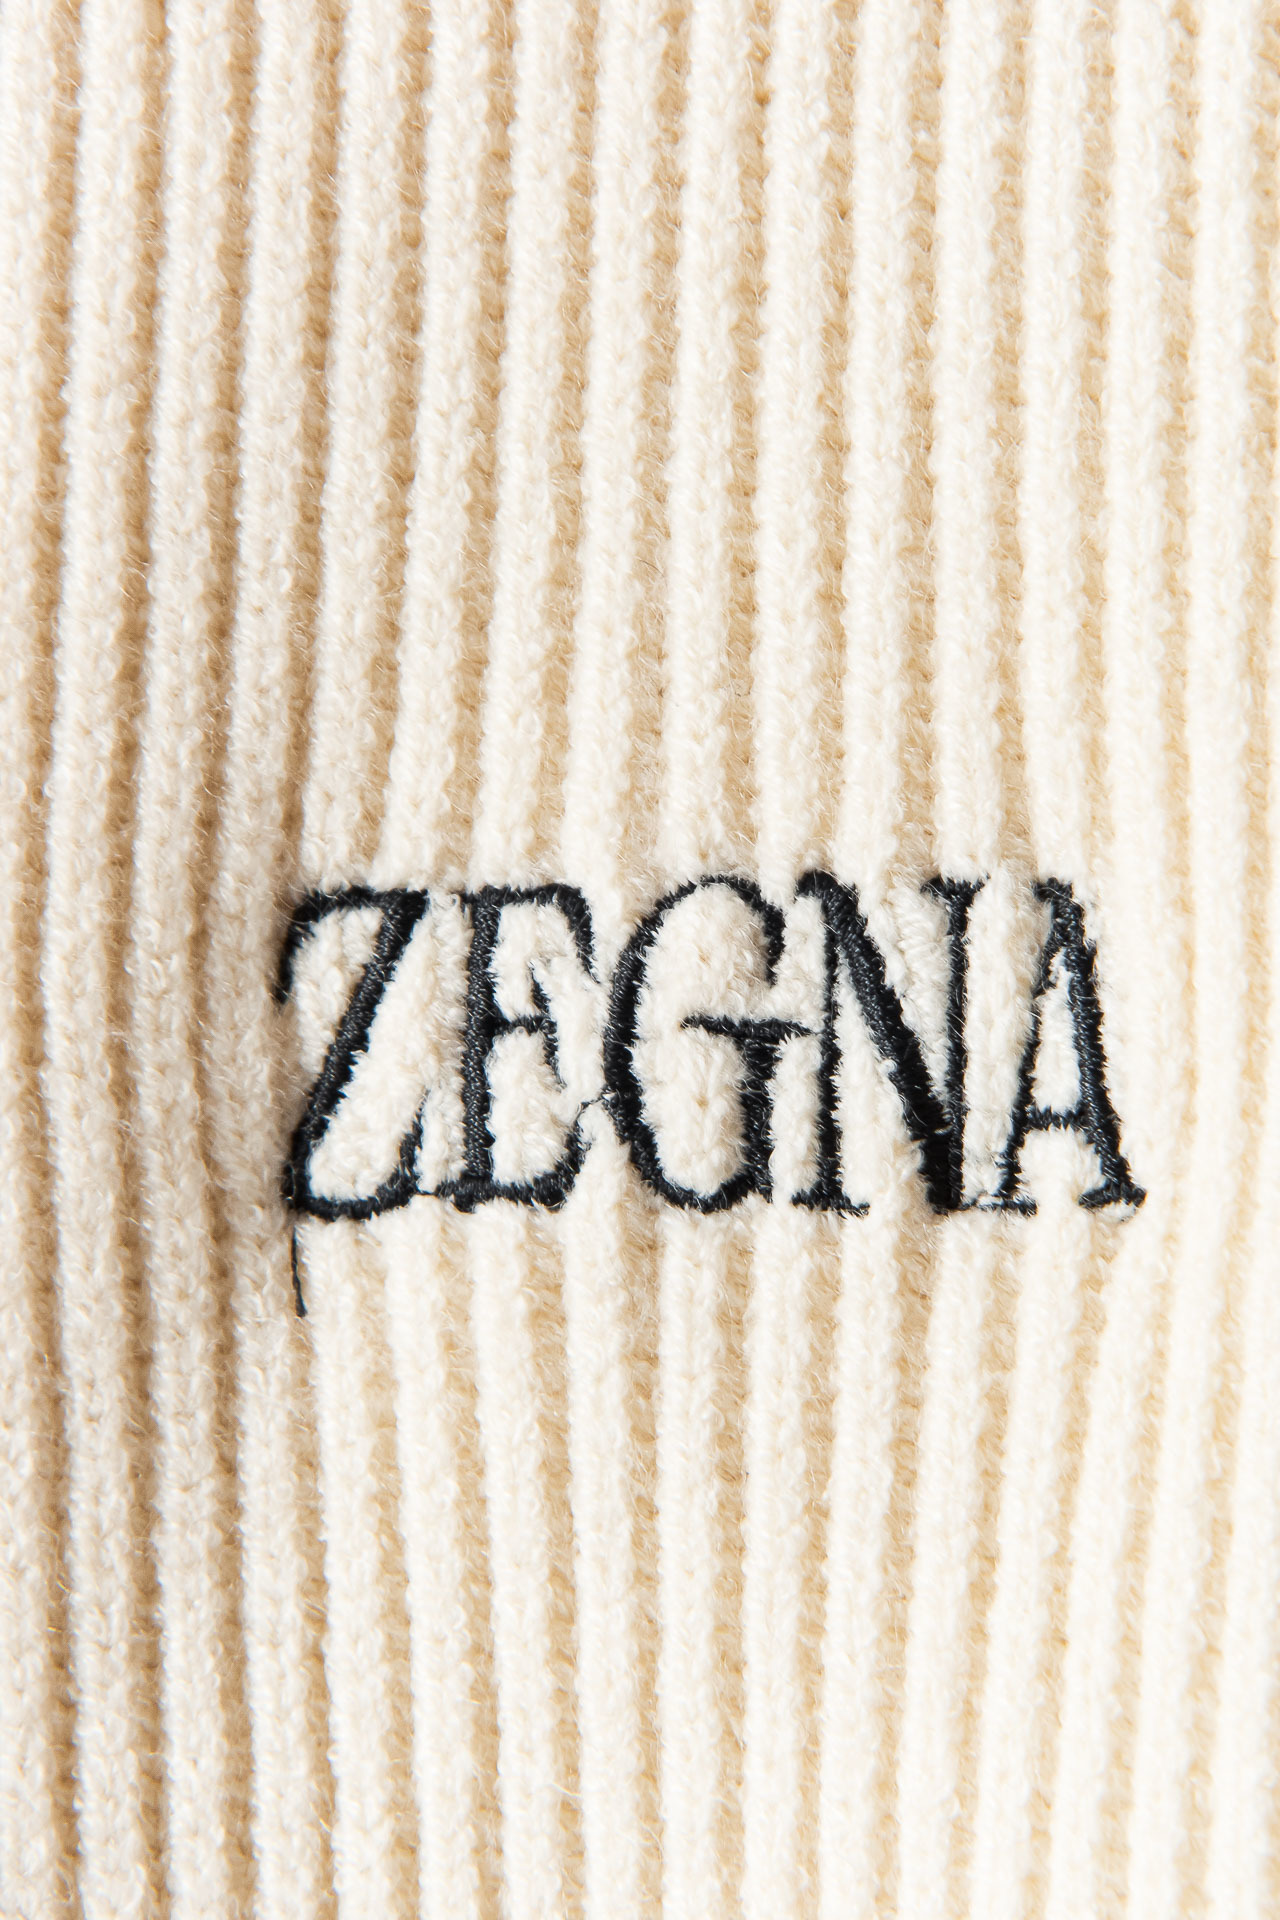 New#！！！杰尼亚ZEGNA24FW新品刺绣logo#拉链翻领毛衣/羊毛衫！经典的美丽奴羊毛混纺织造天